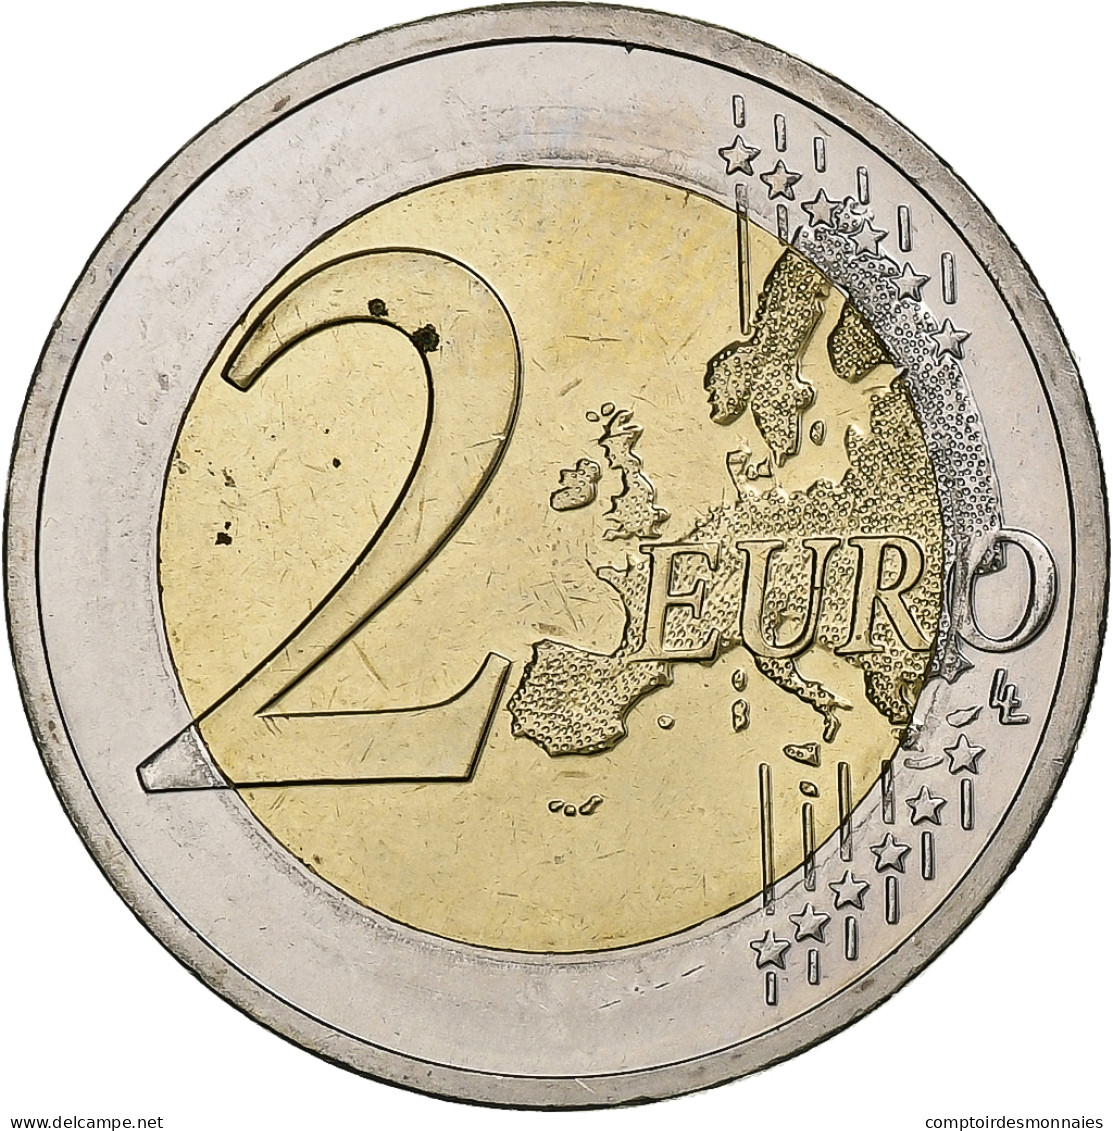 Grèce, 2 Euro, Crète - Grèce, 2013, Athènes, SUP, Bimétallique - Grèce